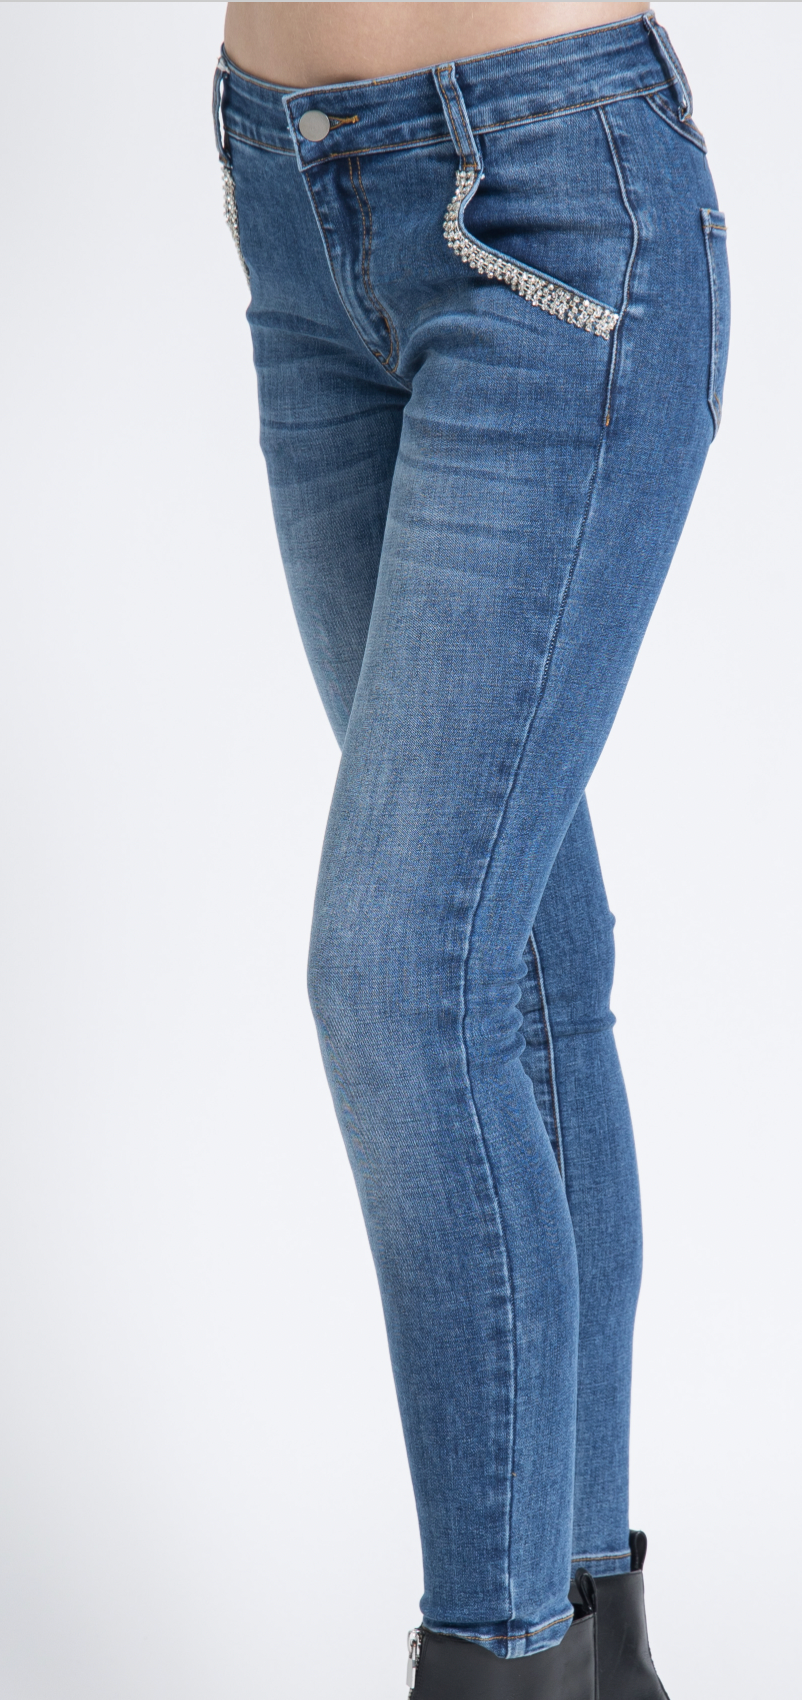 Rhinestone pocket jeans